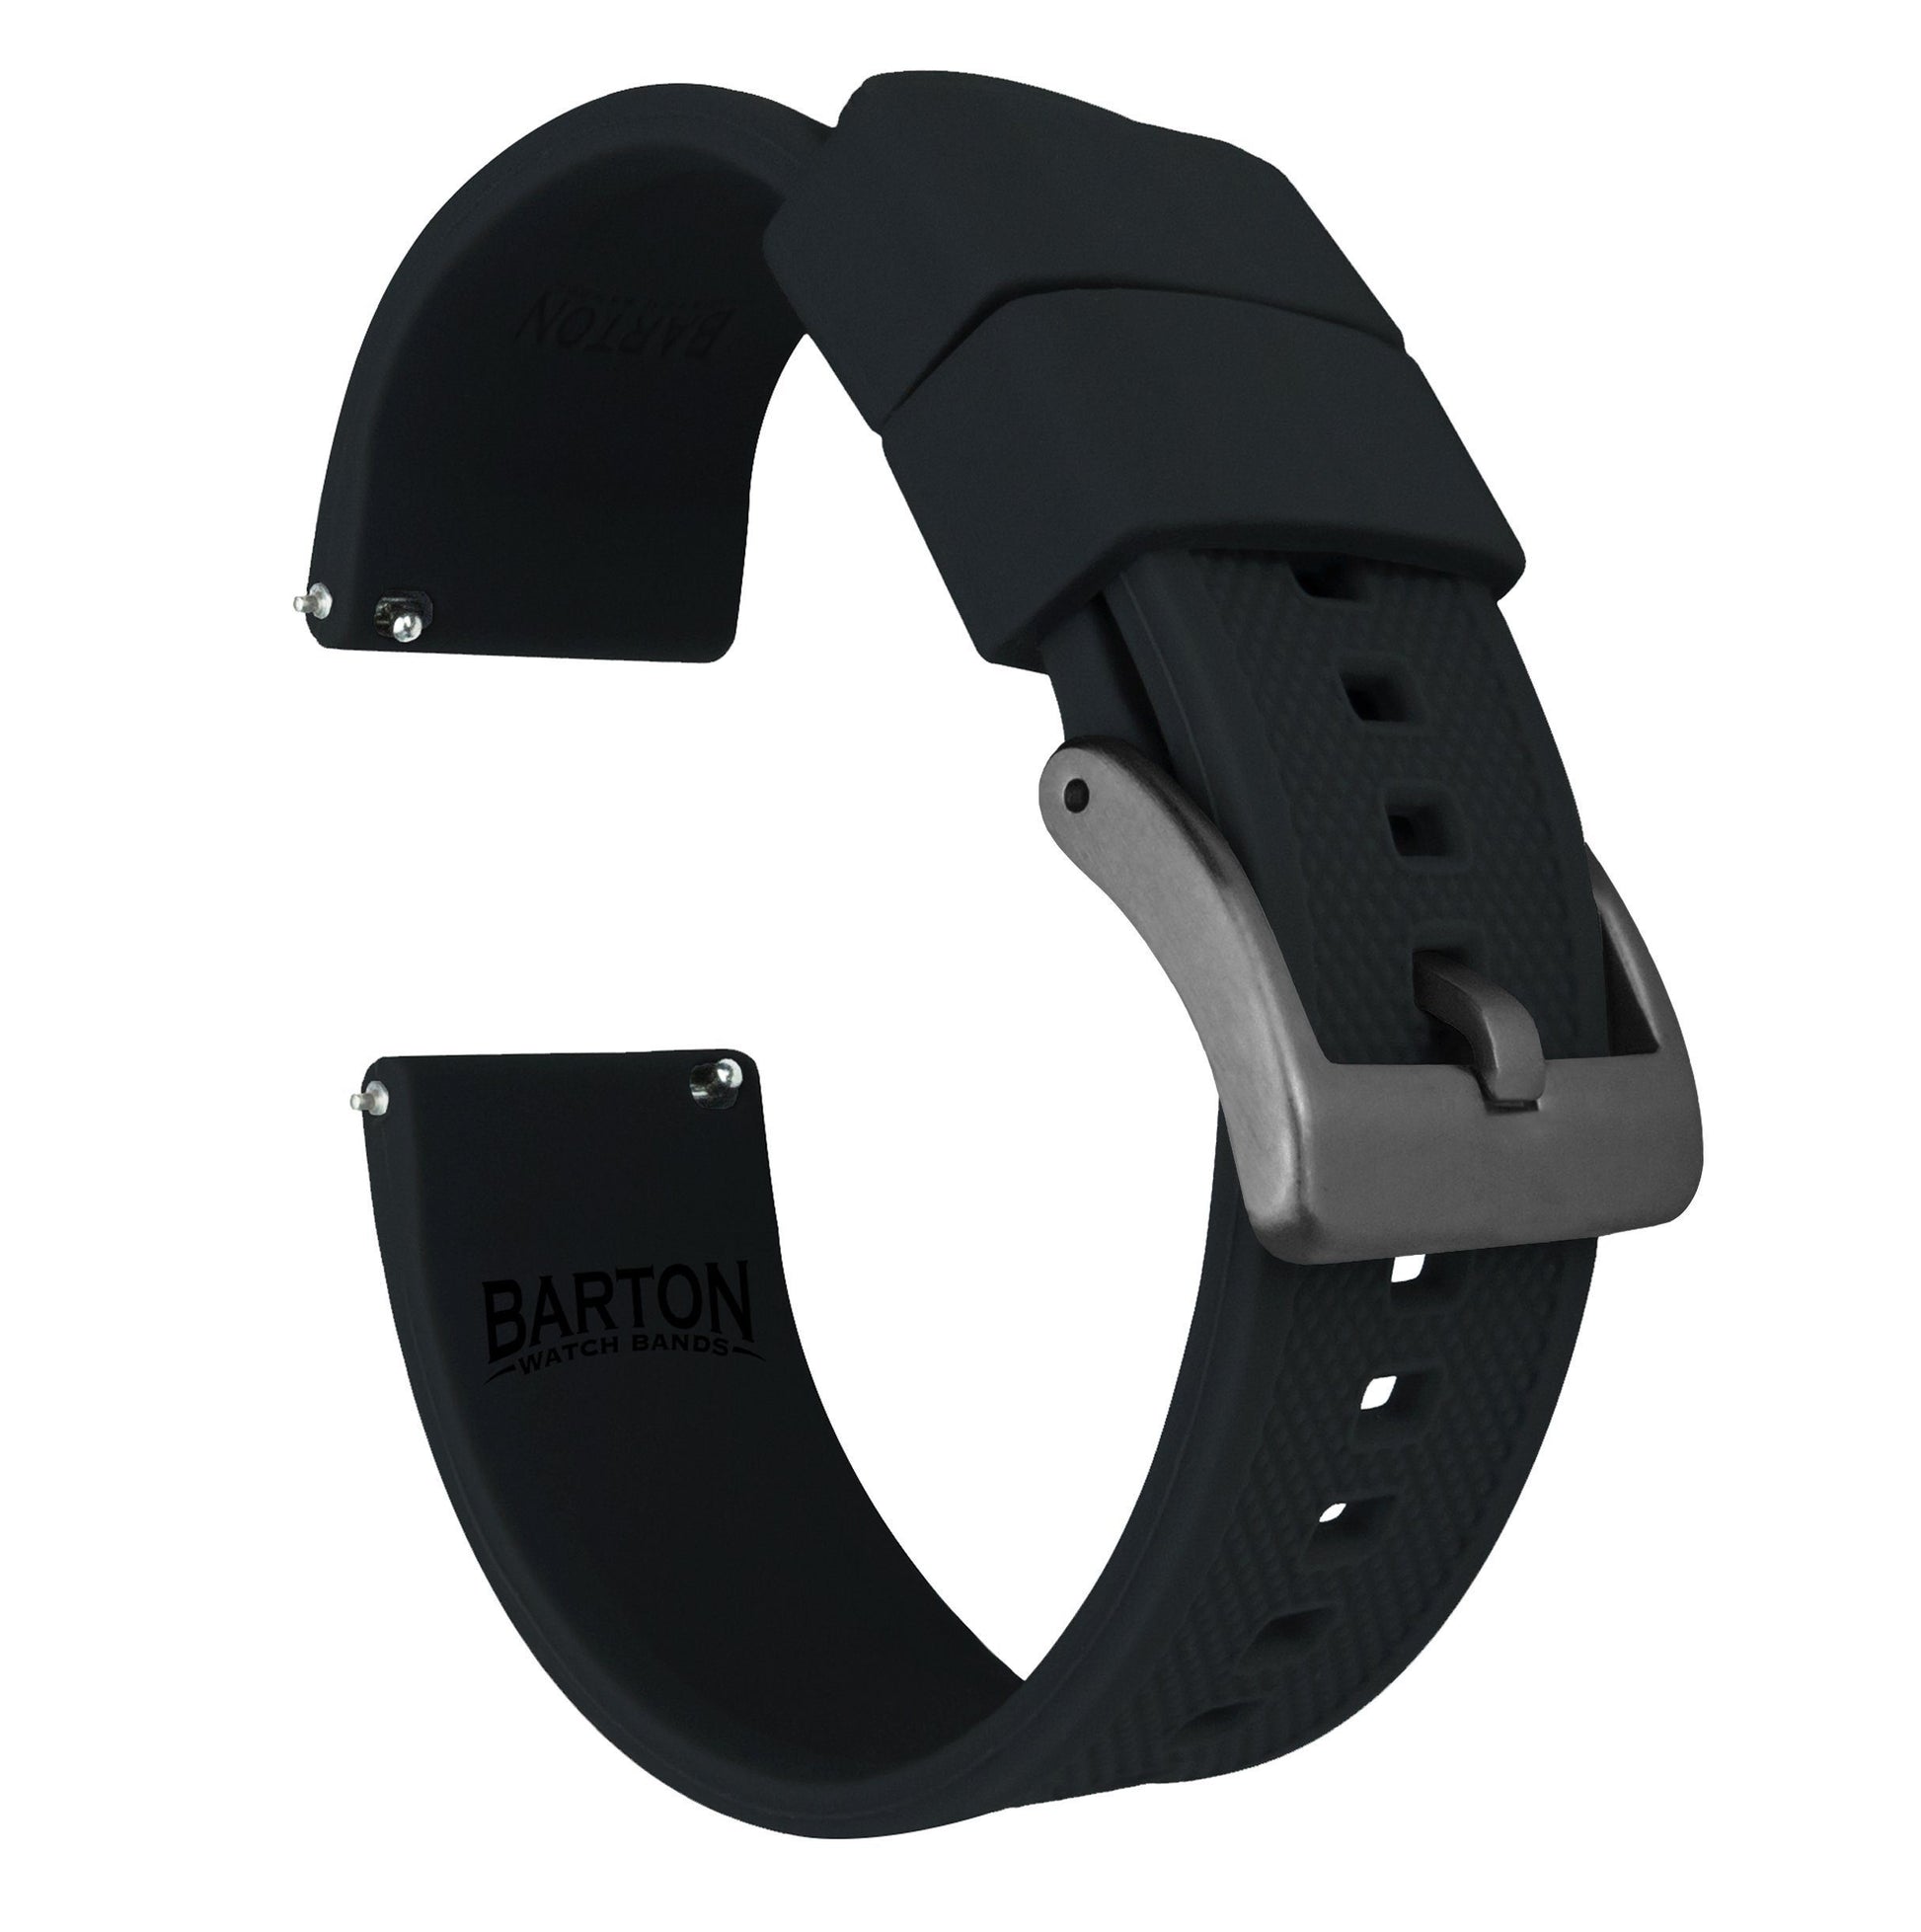 22mm Black - Barton Elite Silicone Watch Bands - Quick Release - Choose Strap Color & Width